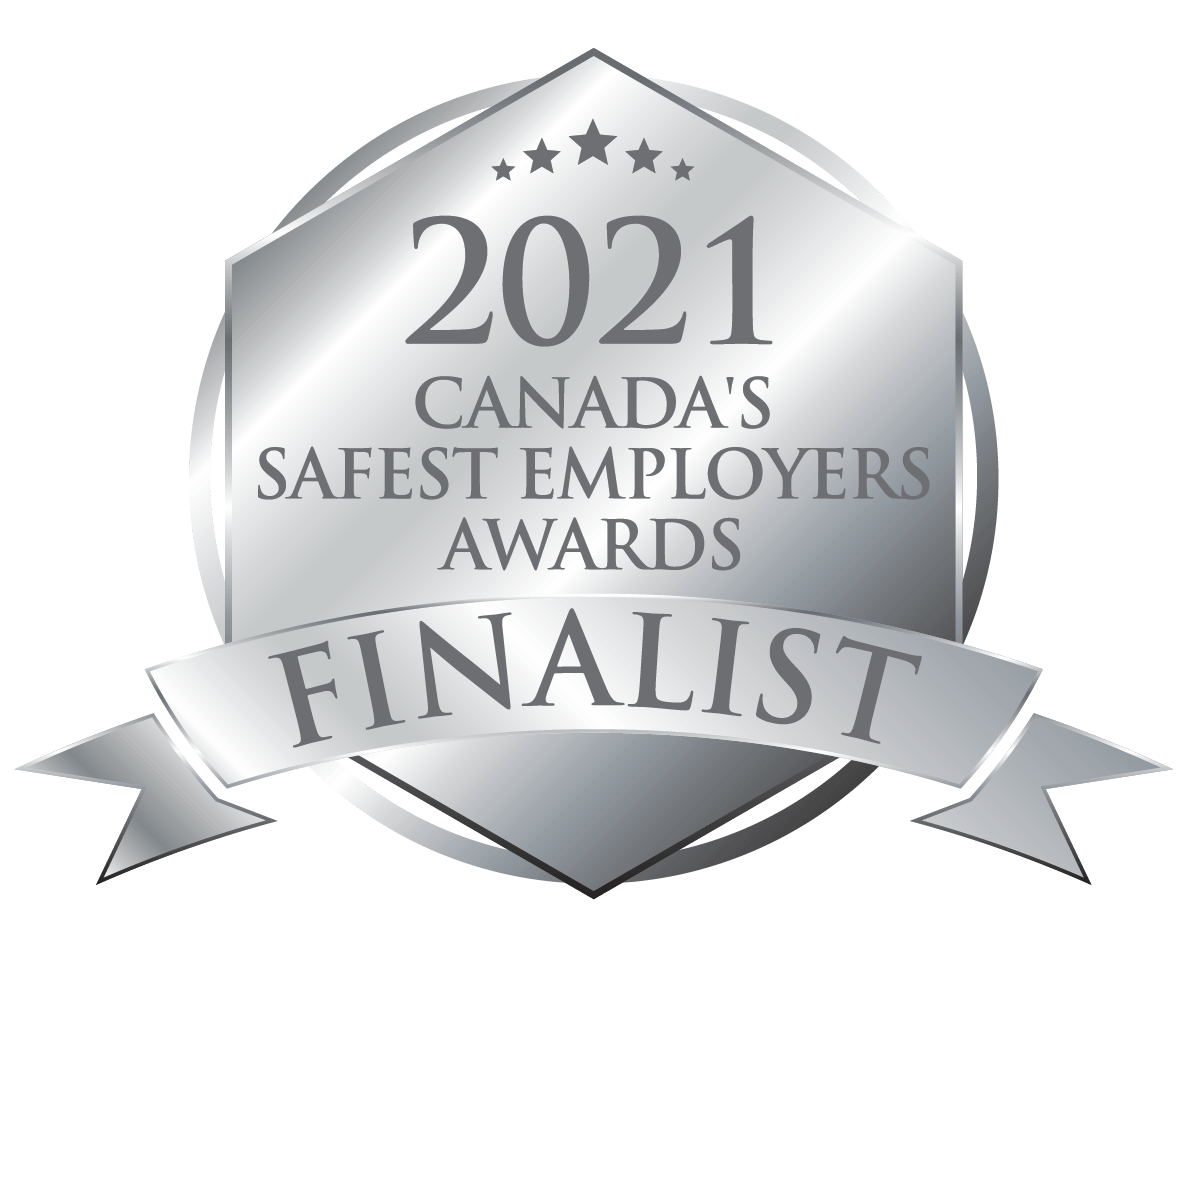 2021 Canada's Safest Employers Award Finalist